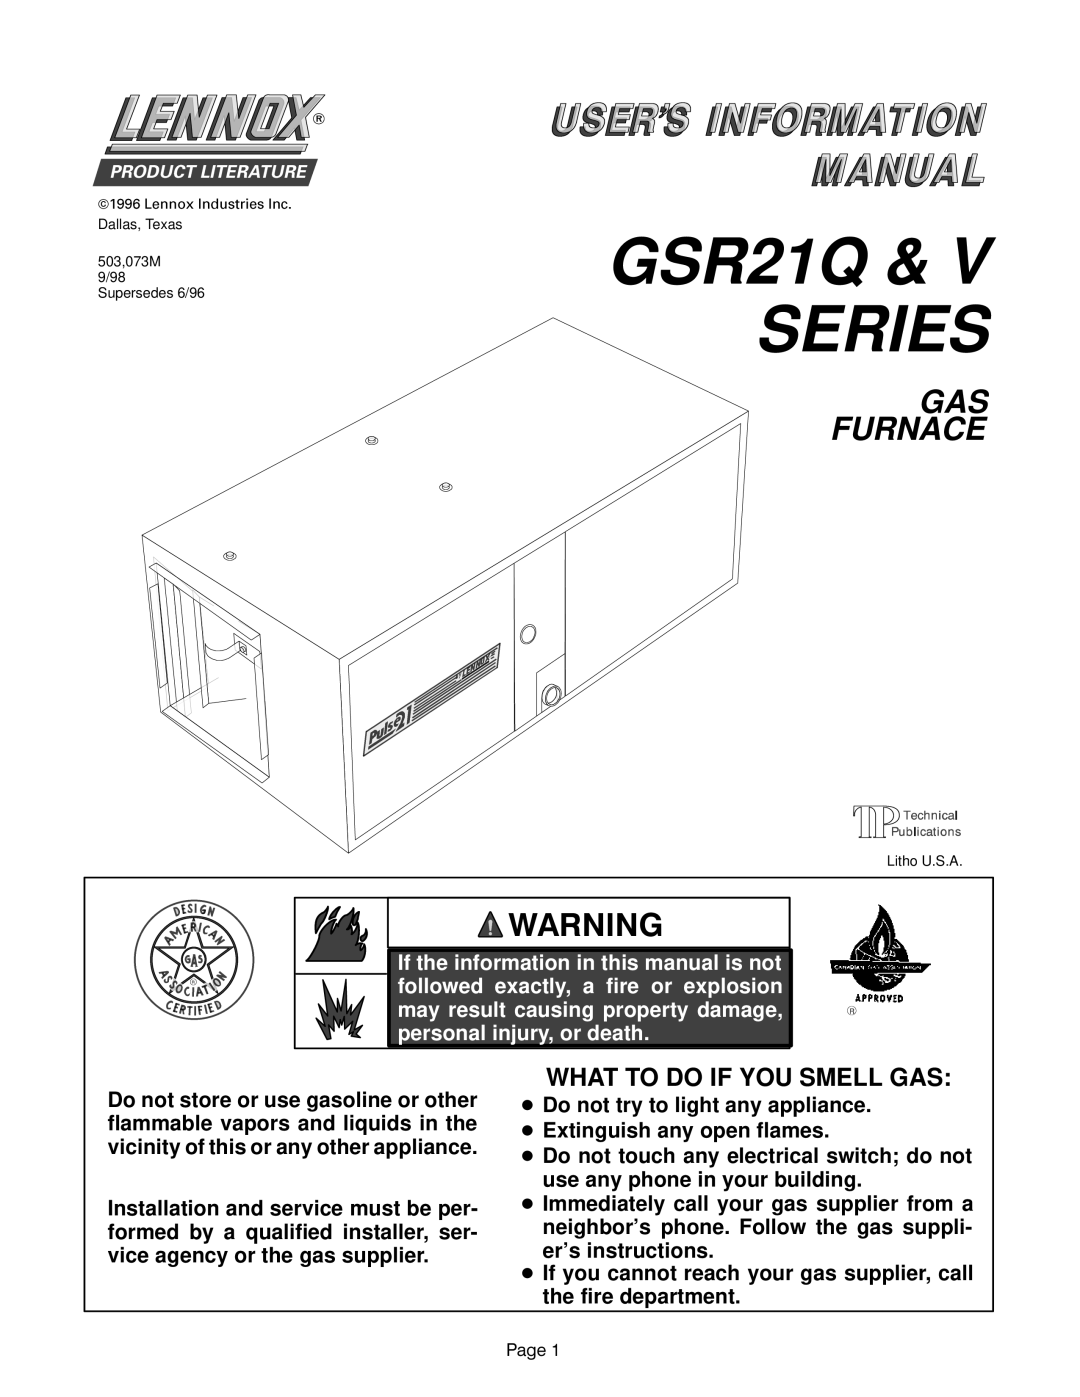 Lennox International Inc GSR21V manual GSR21Q & SERIES, Gas Furnace, $51,1, What To Do If You Smell Gas 